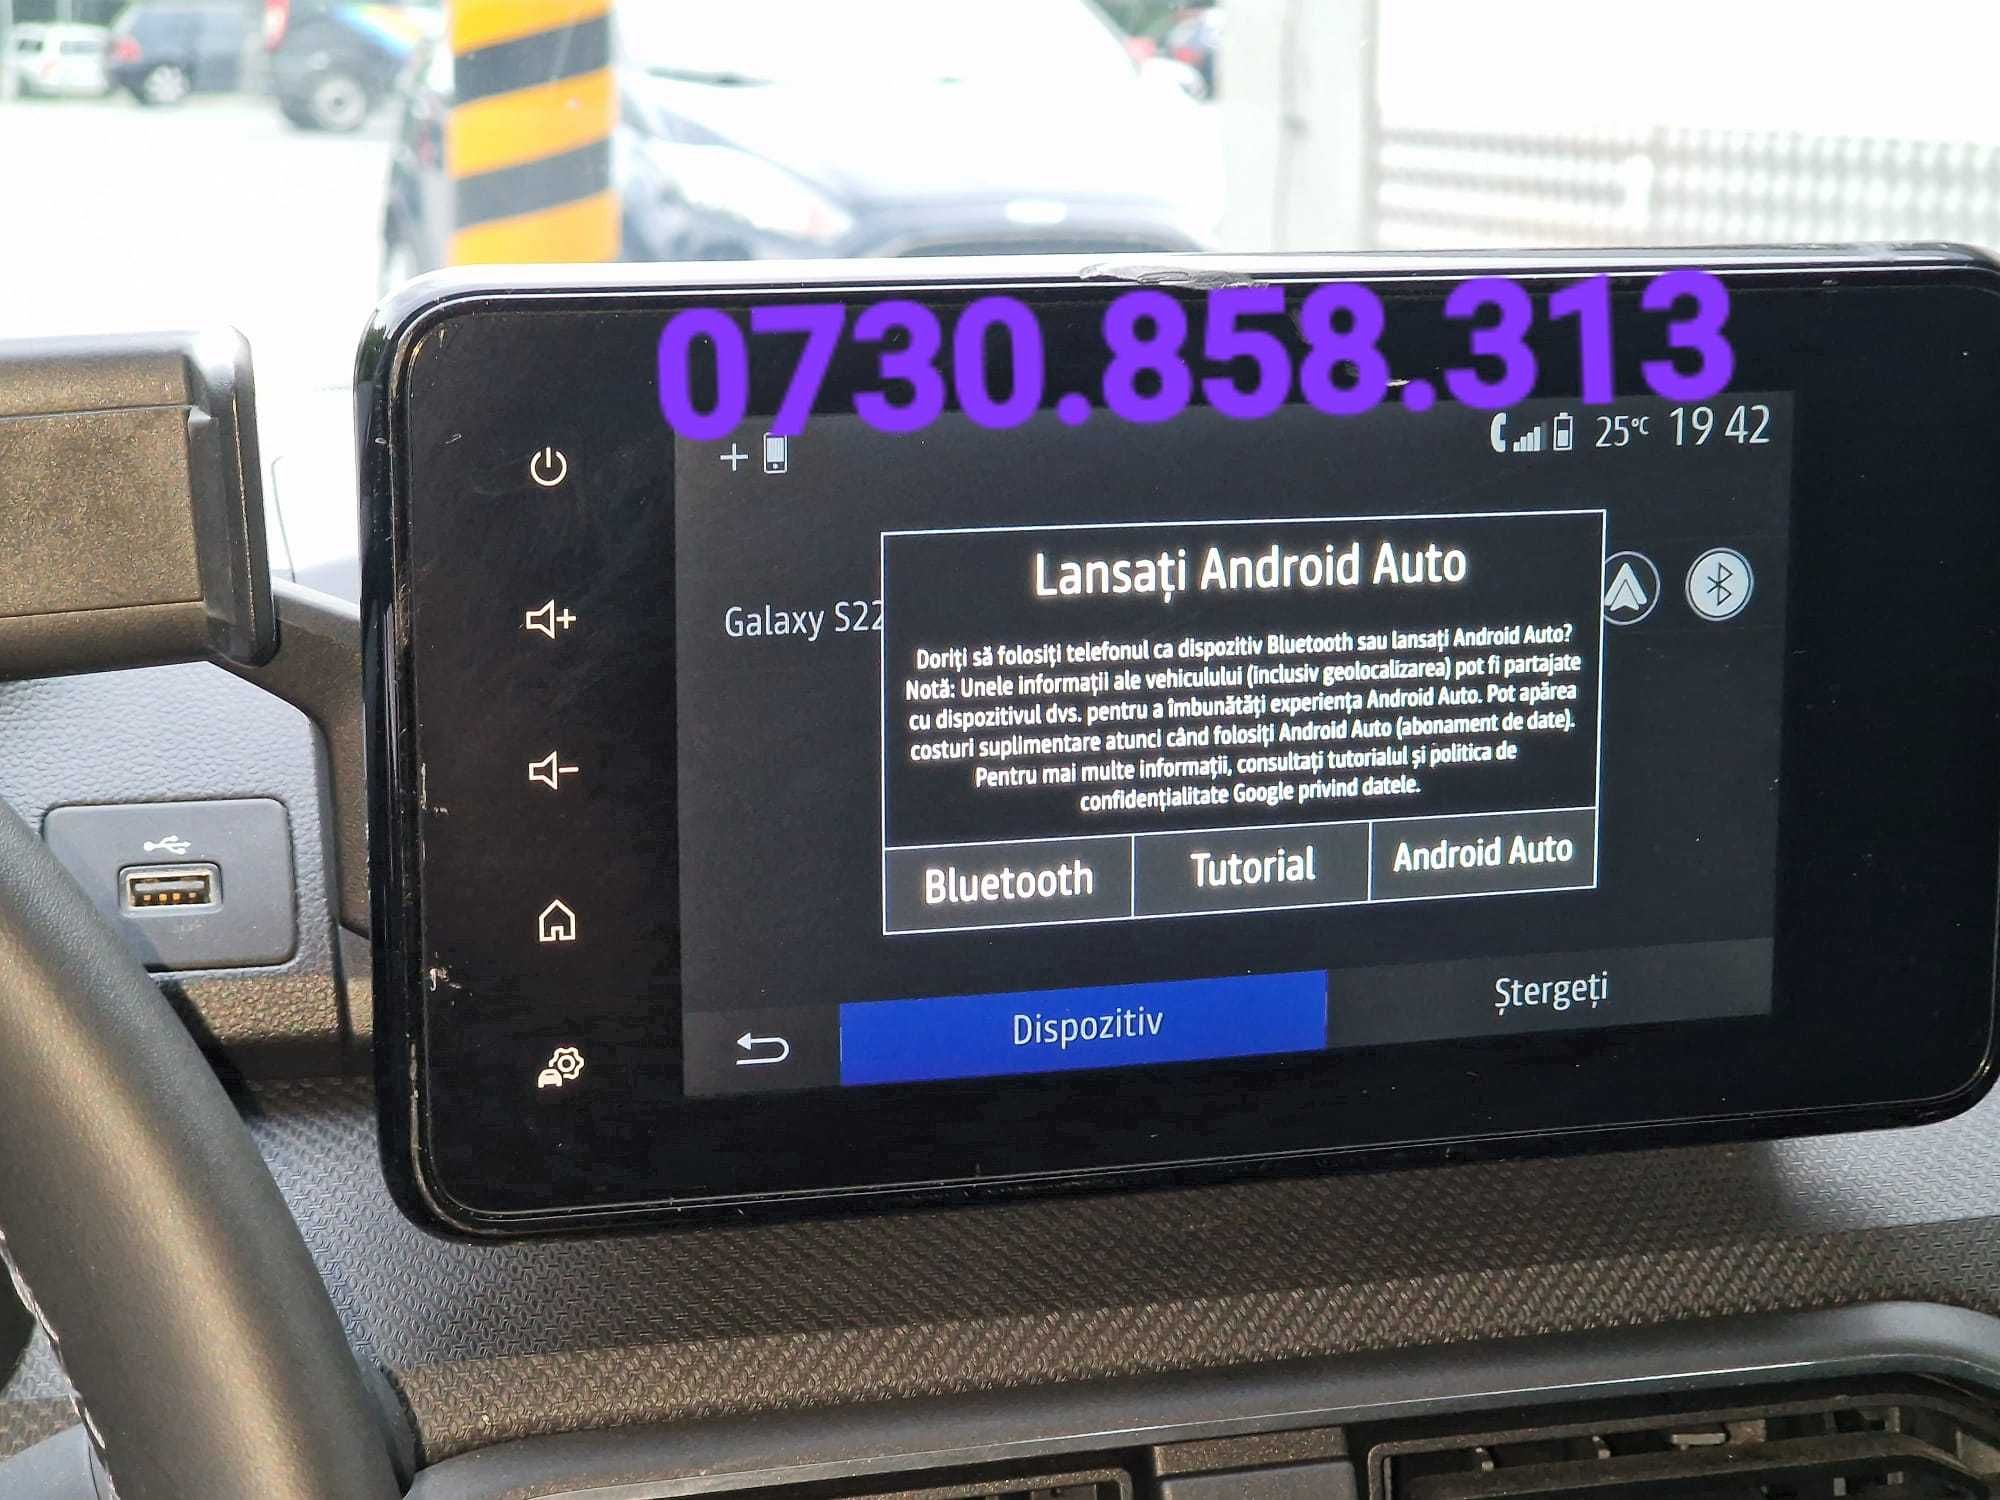 WI-FI Dacia Logan Sandero wireless CARPLAY - Android